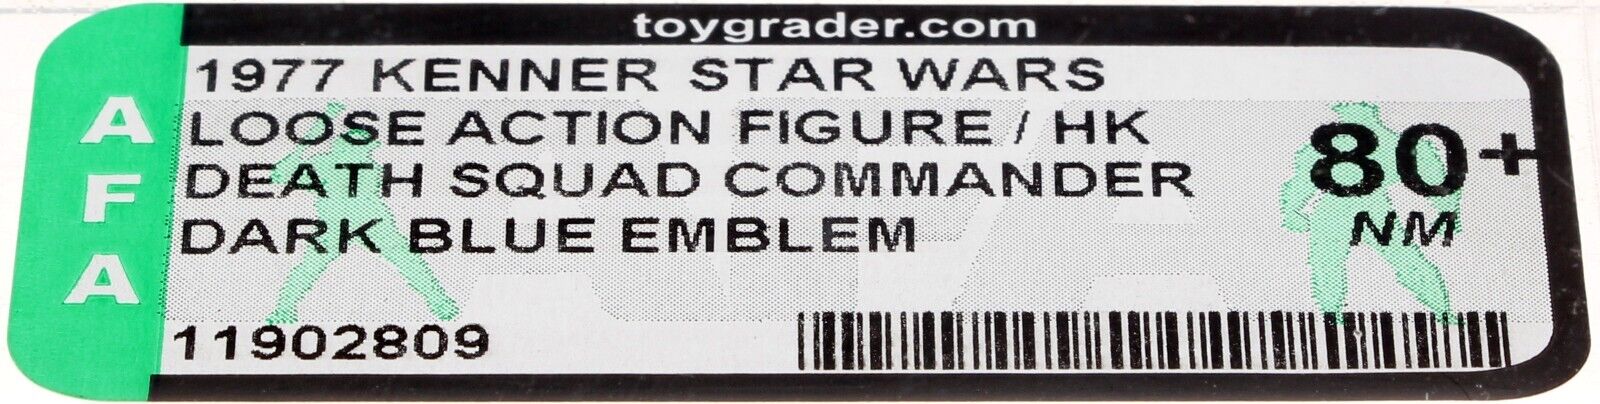 Star Destoyer Commander sold